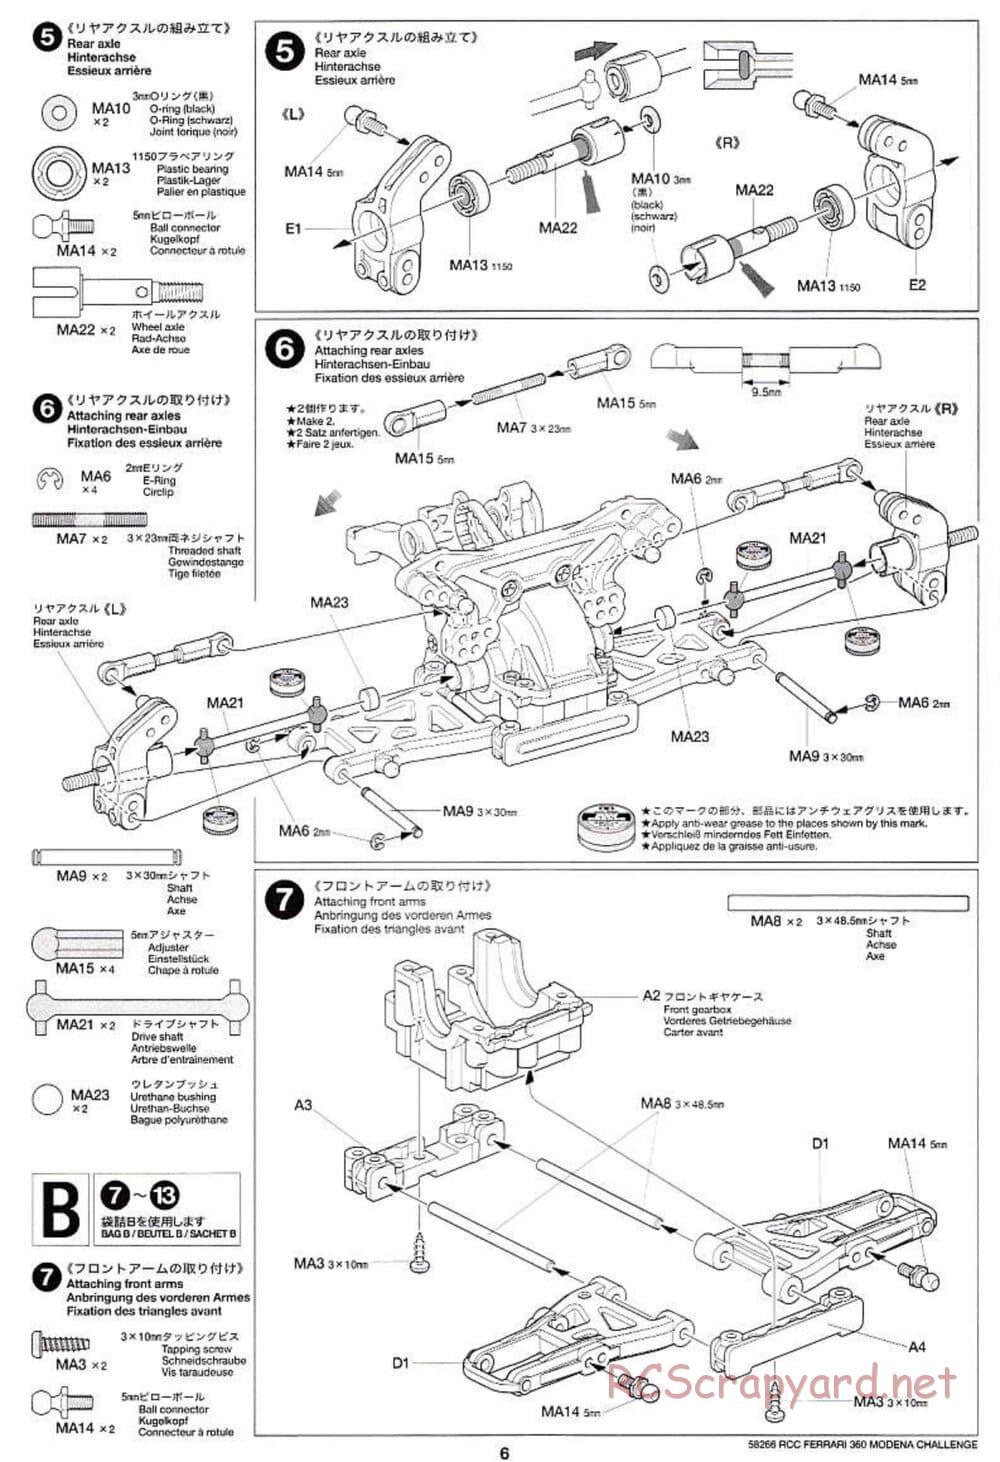 Tamiya - Ferrari 360 Modena Challenge - TA-04 Chassis - Manual - Page 6